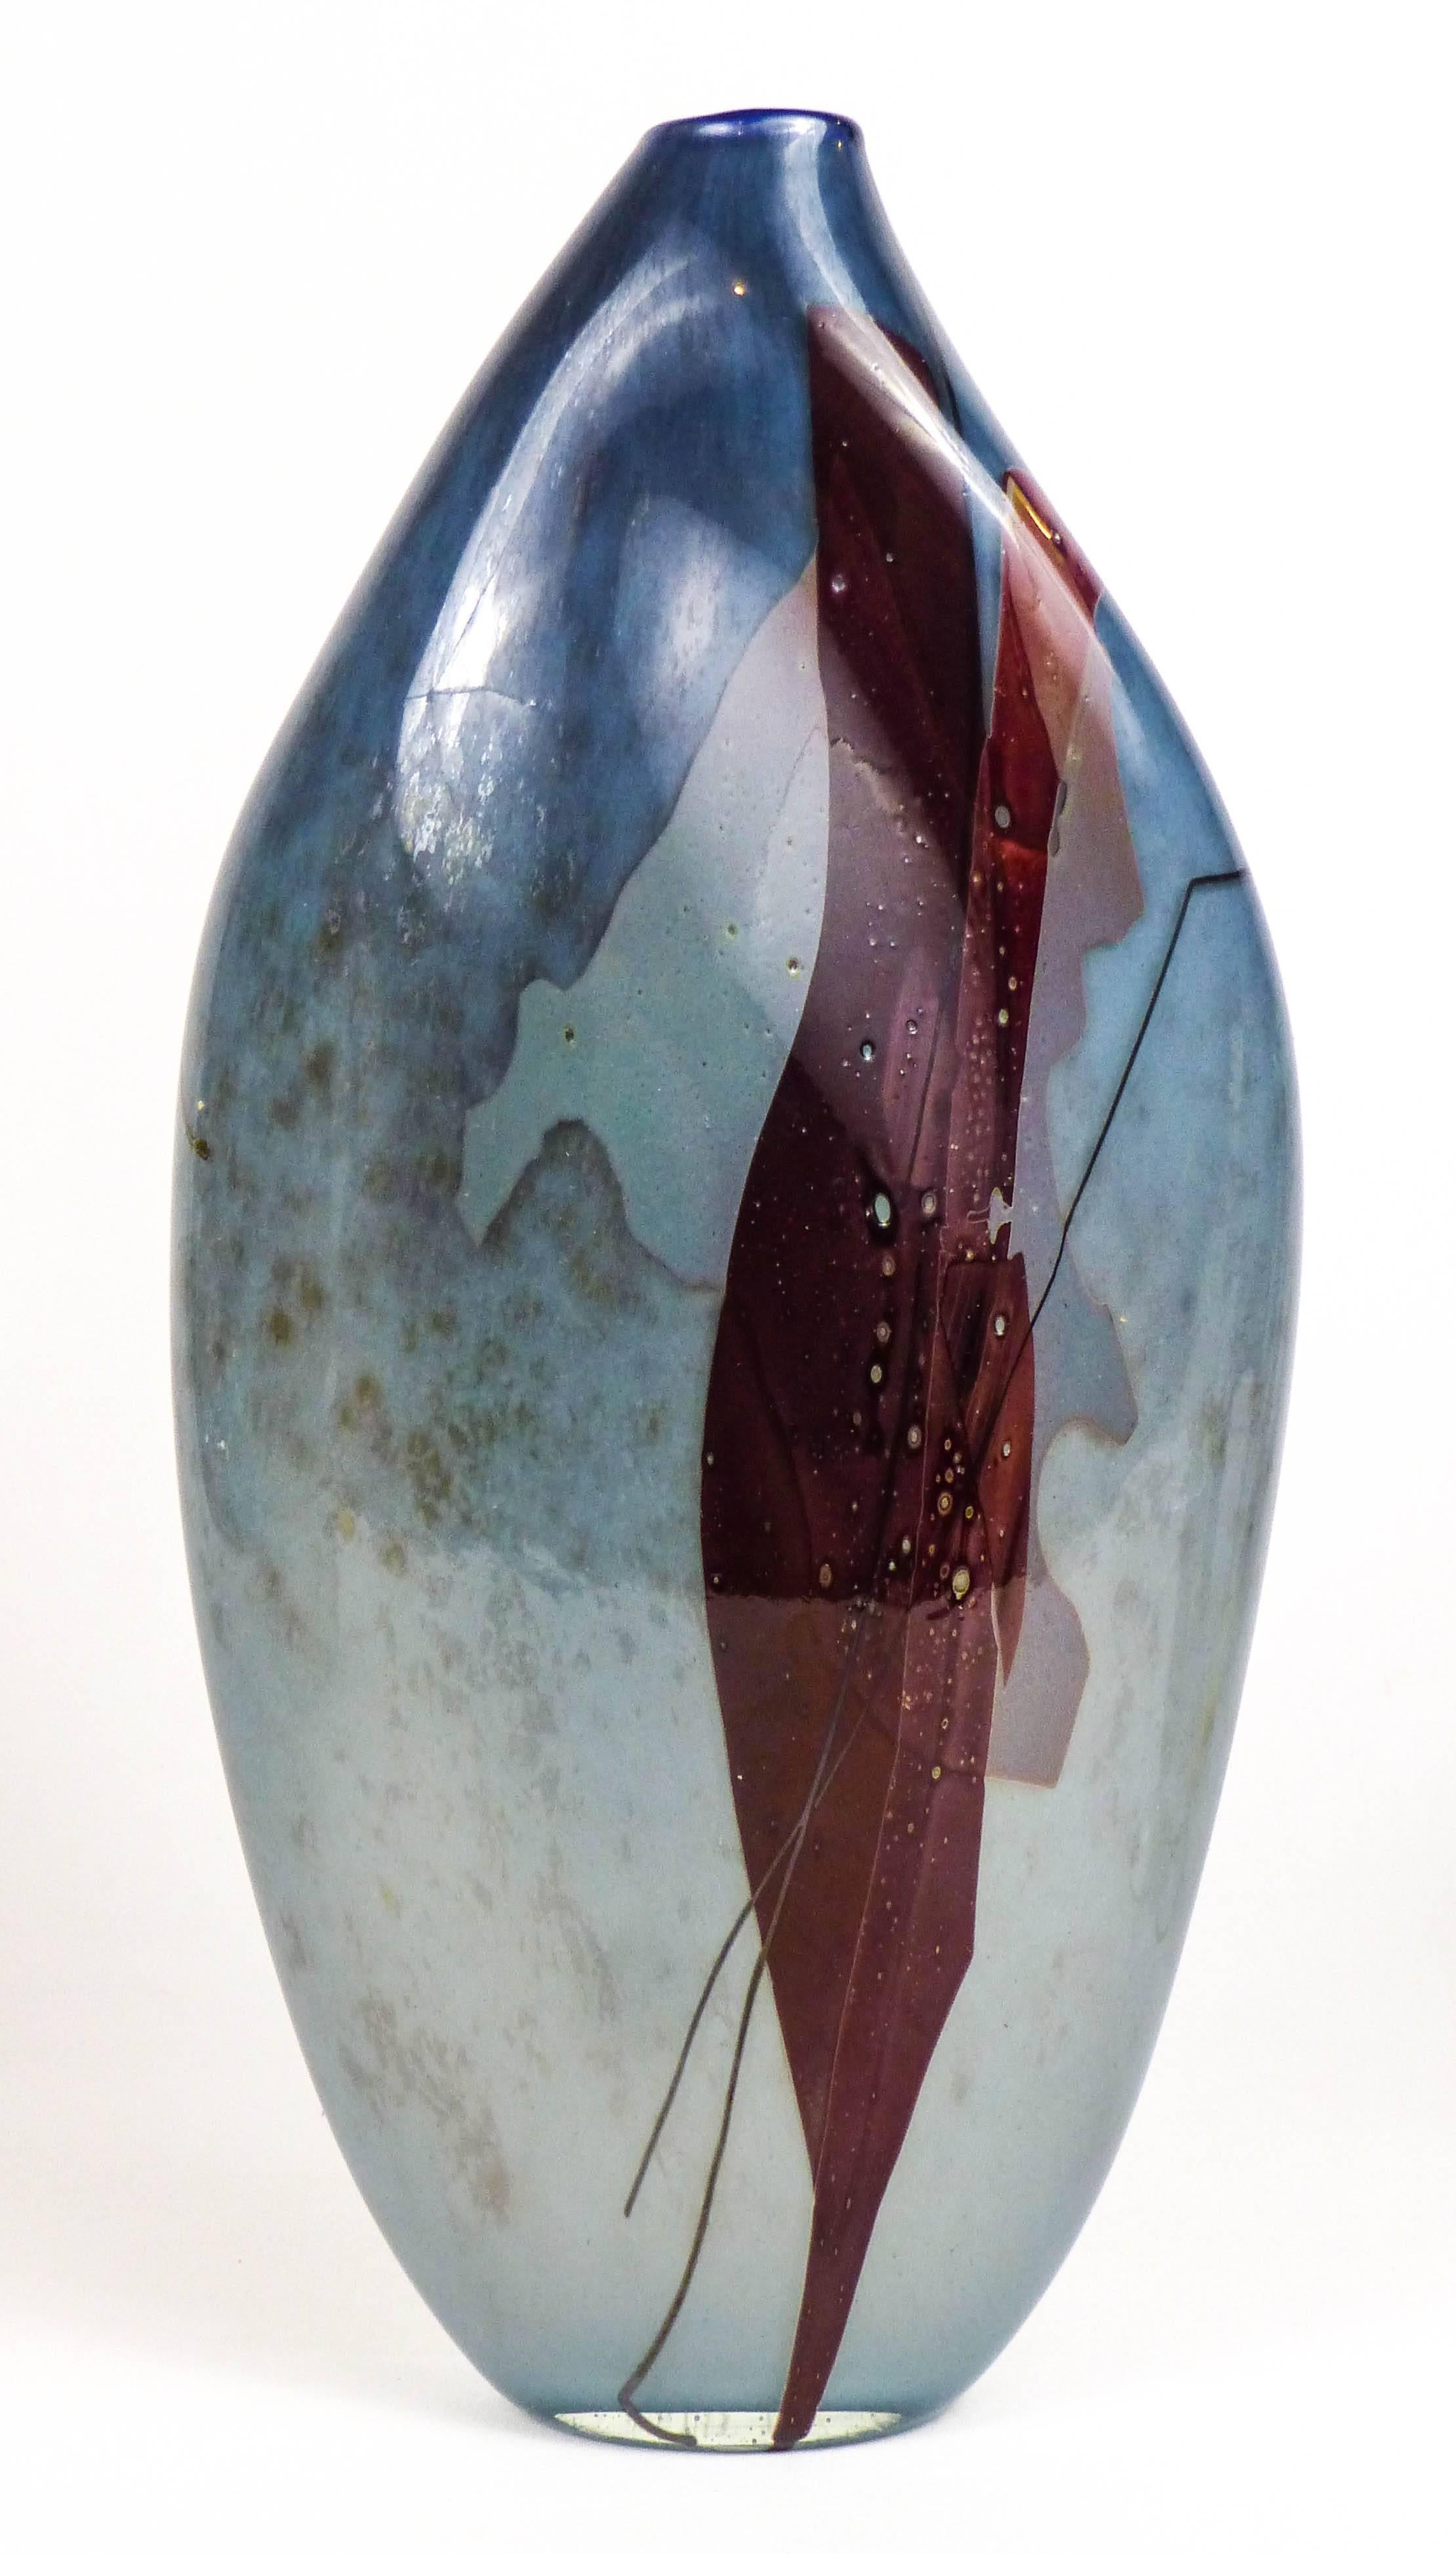 Shard Vessel - Sculpture by William Morris